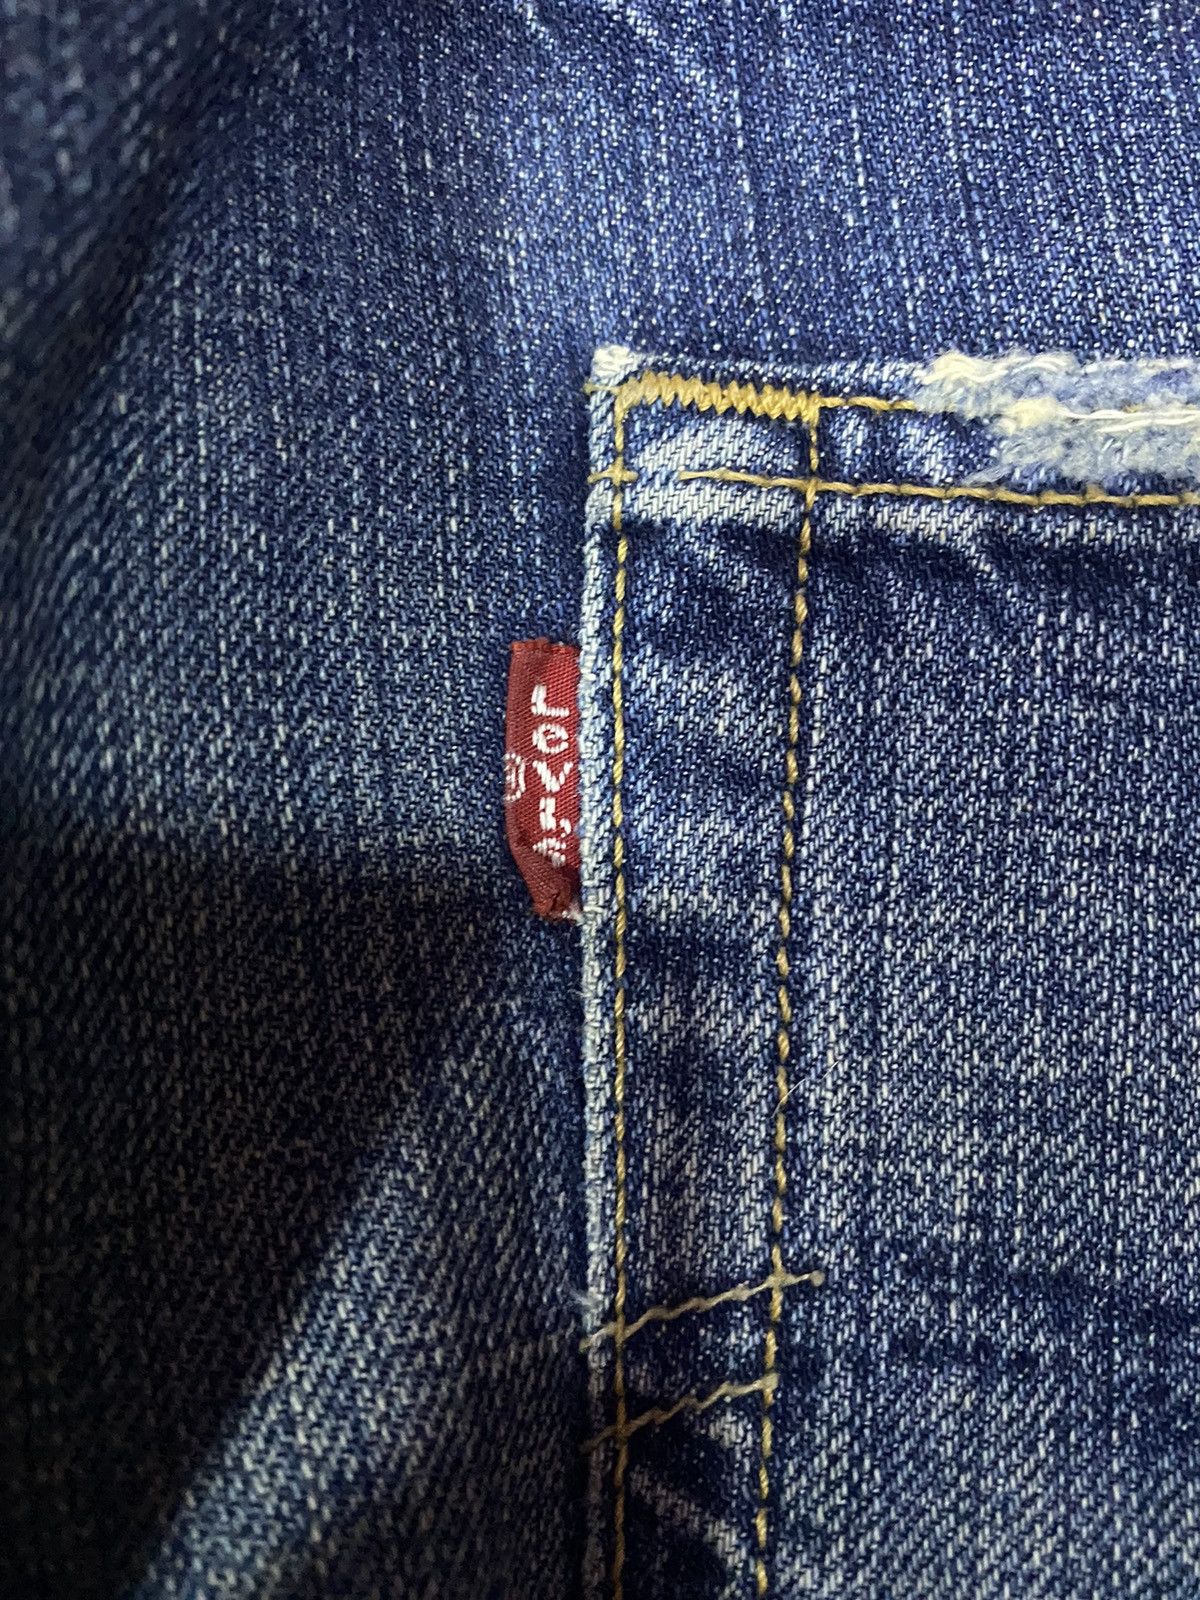 Levi’s San Francisco 501 Denim Jeans - 6